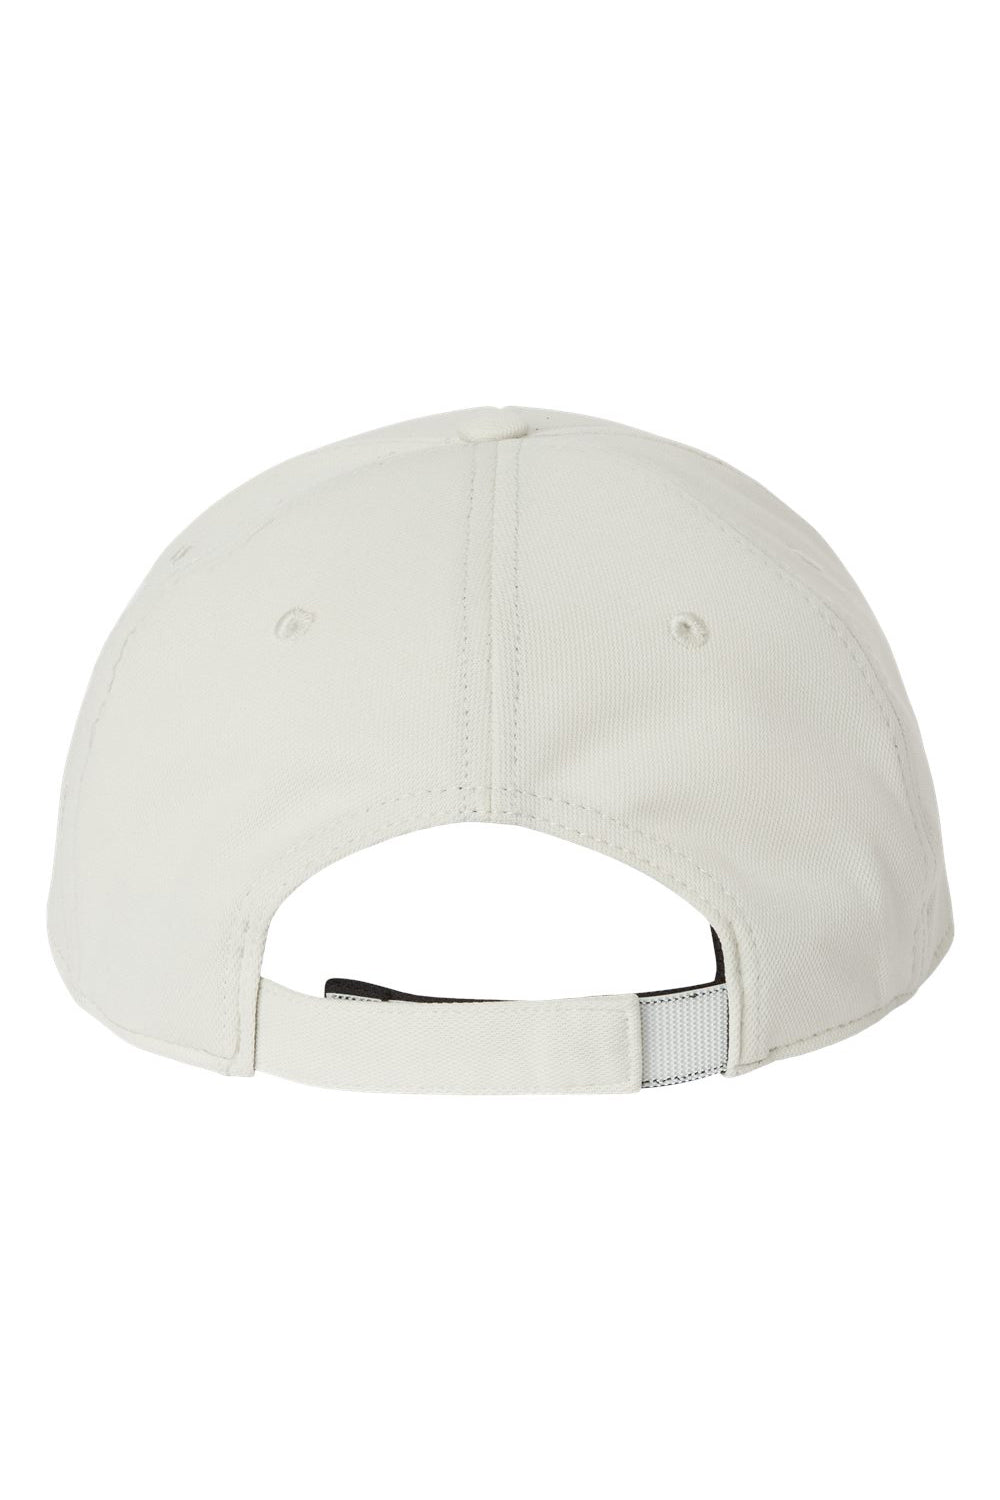 Atlantis Headwear SKYE Mens Sustainable Honeycomb Adjustable Hat Coconut Milk Flat Back